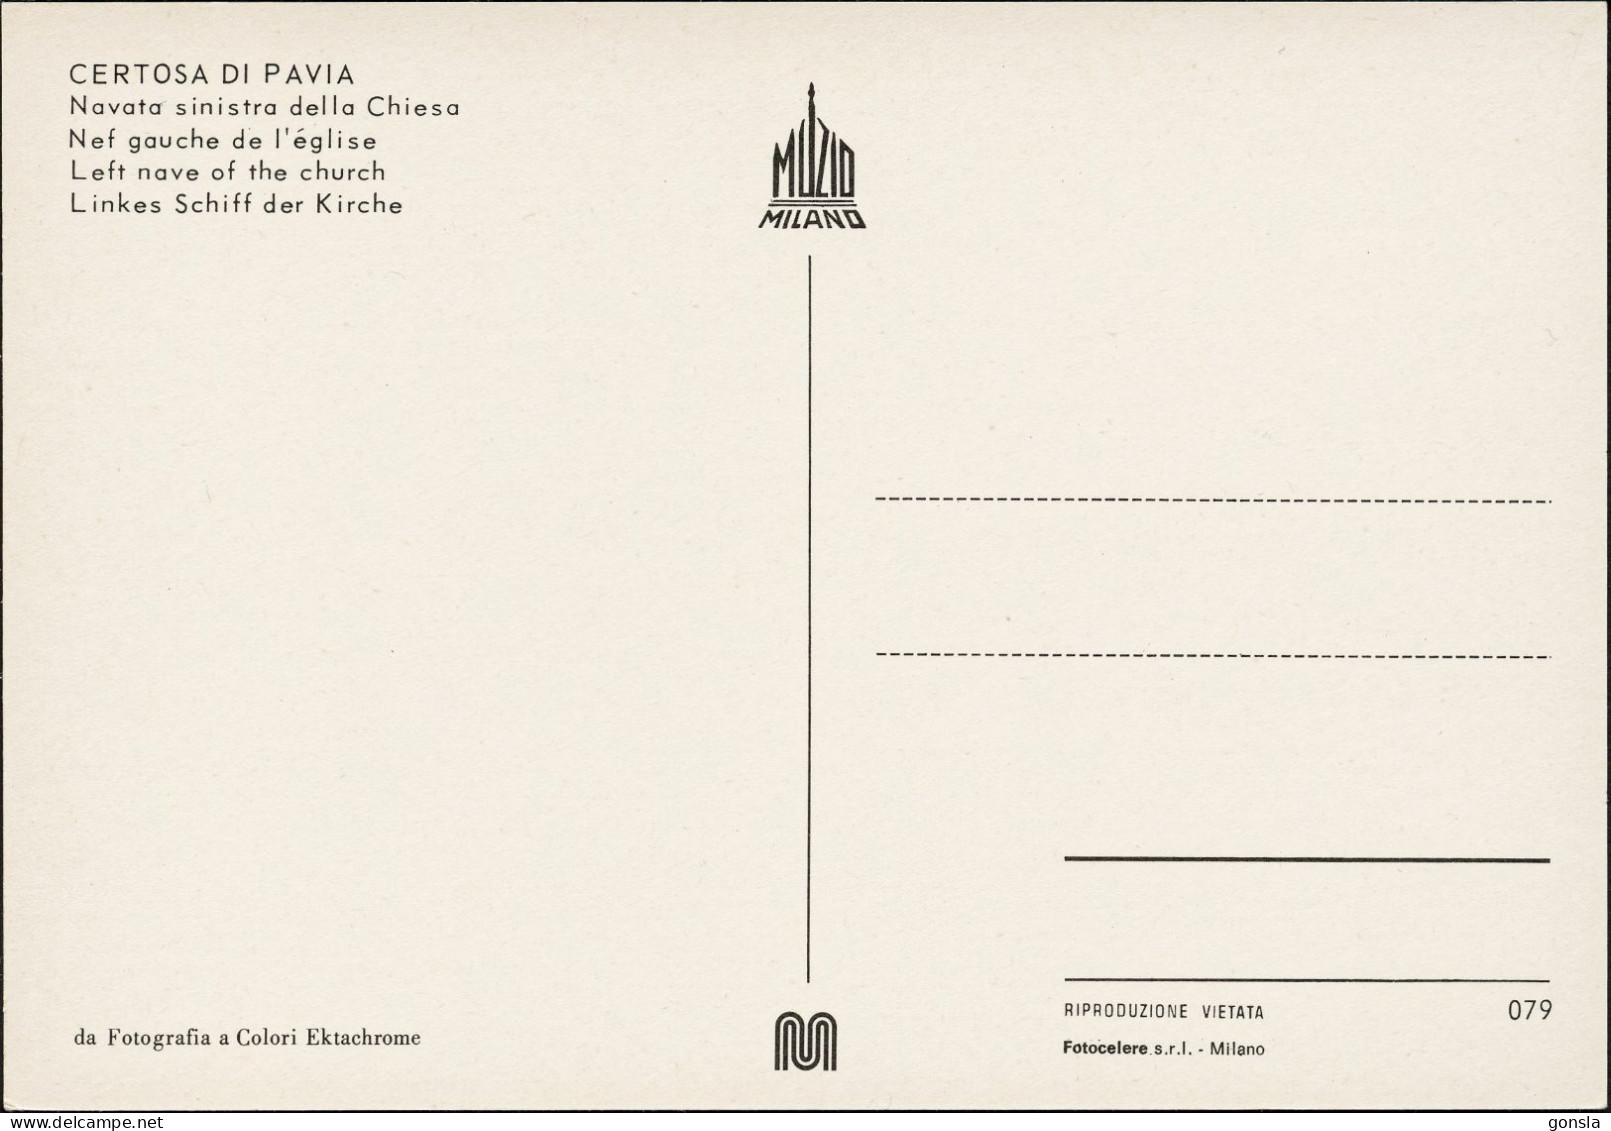 CERTOSA DI PAVIA "Monastère" Lot de 4 cartes postales